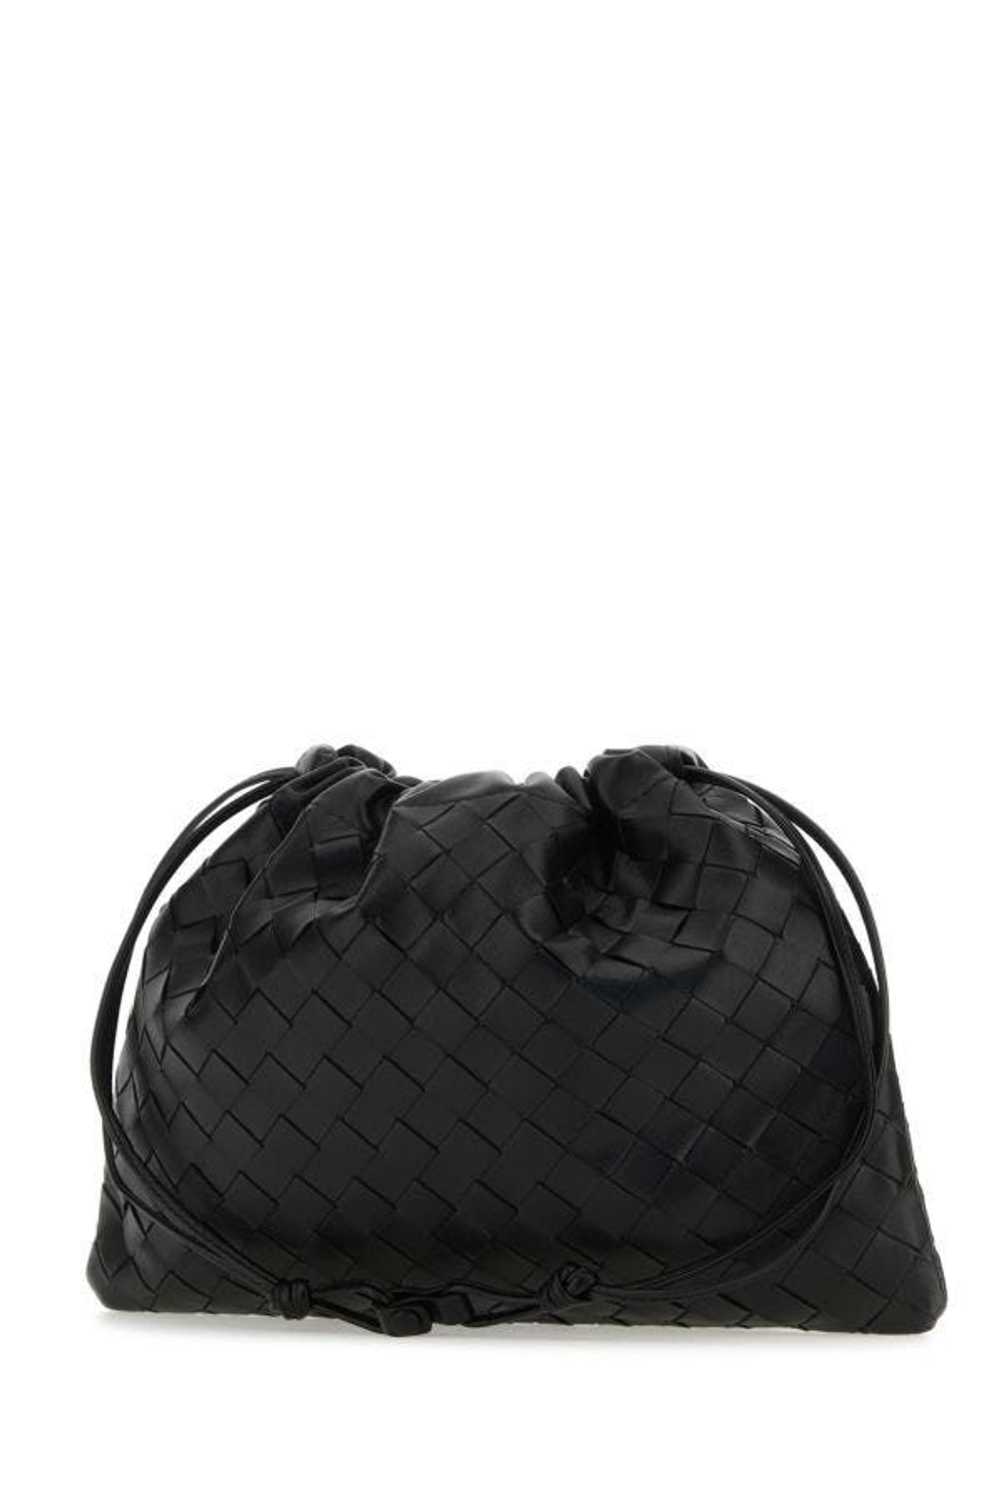 Bottega Veneta Black Leather Medium Clutch - image 4